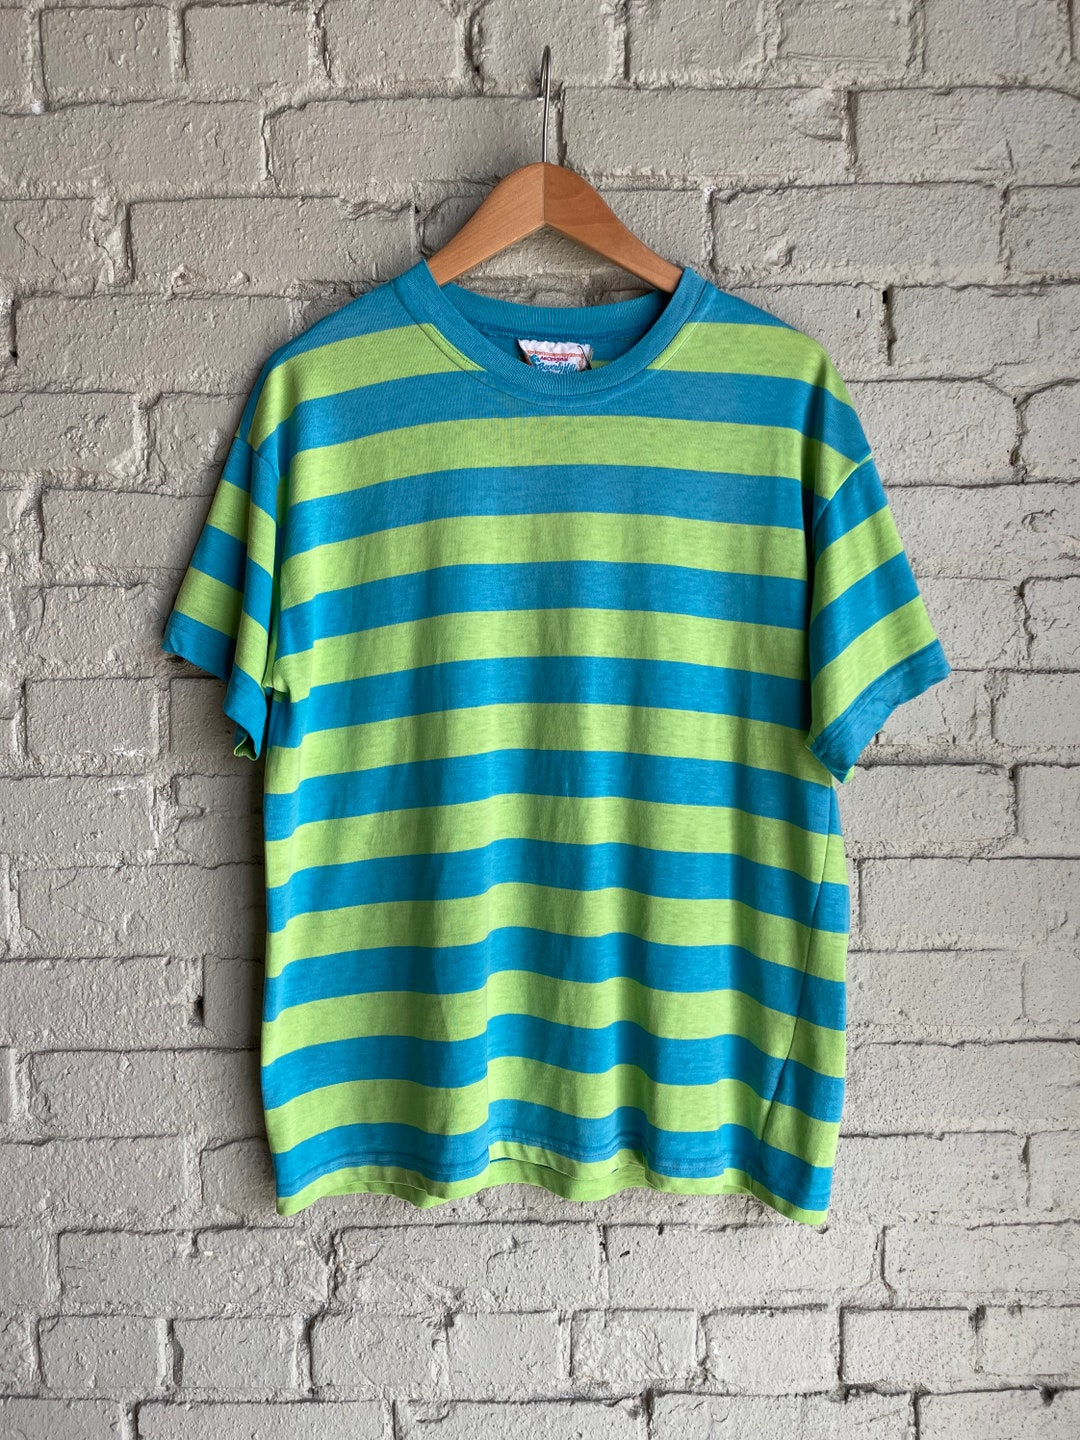 Med Large / 1990s Striped T-shirt / Blue / Green - Etsy